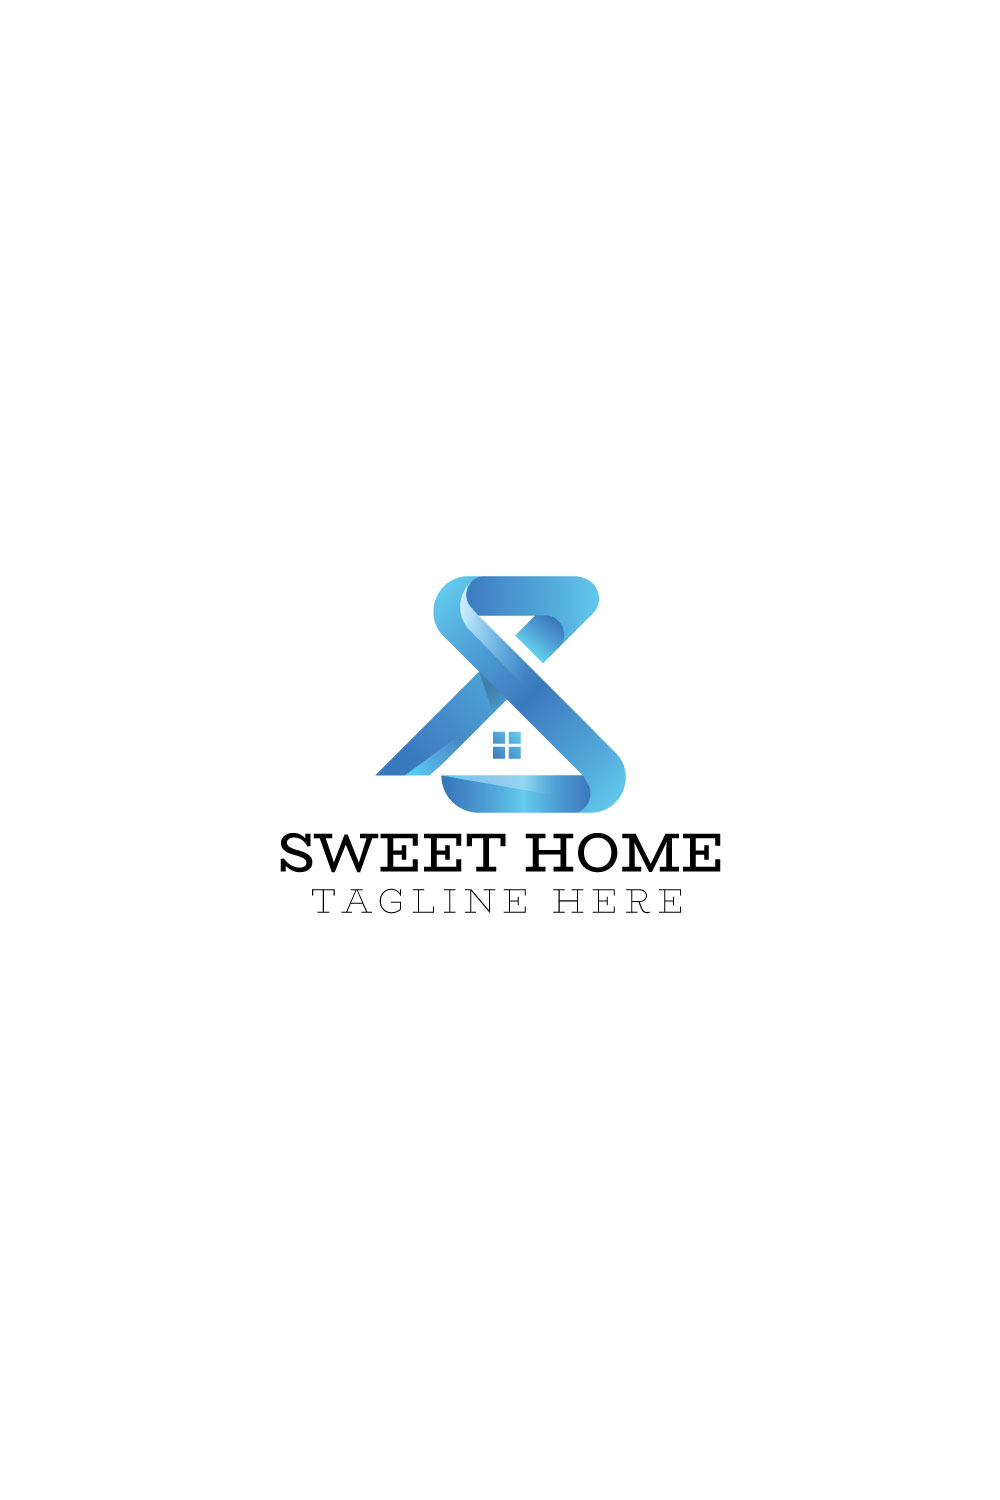 Letter S home logo design pinterest preview image.